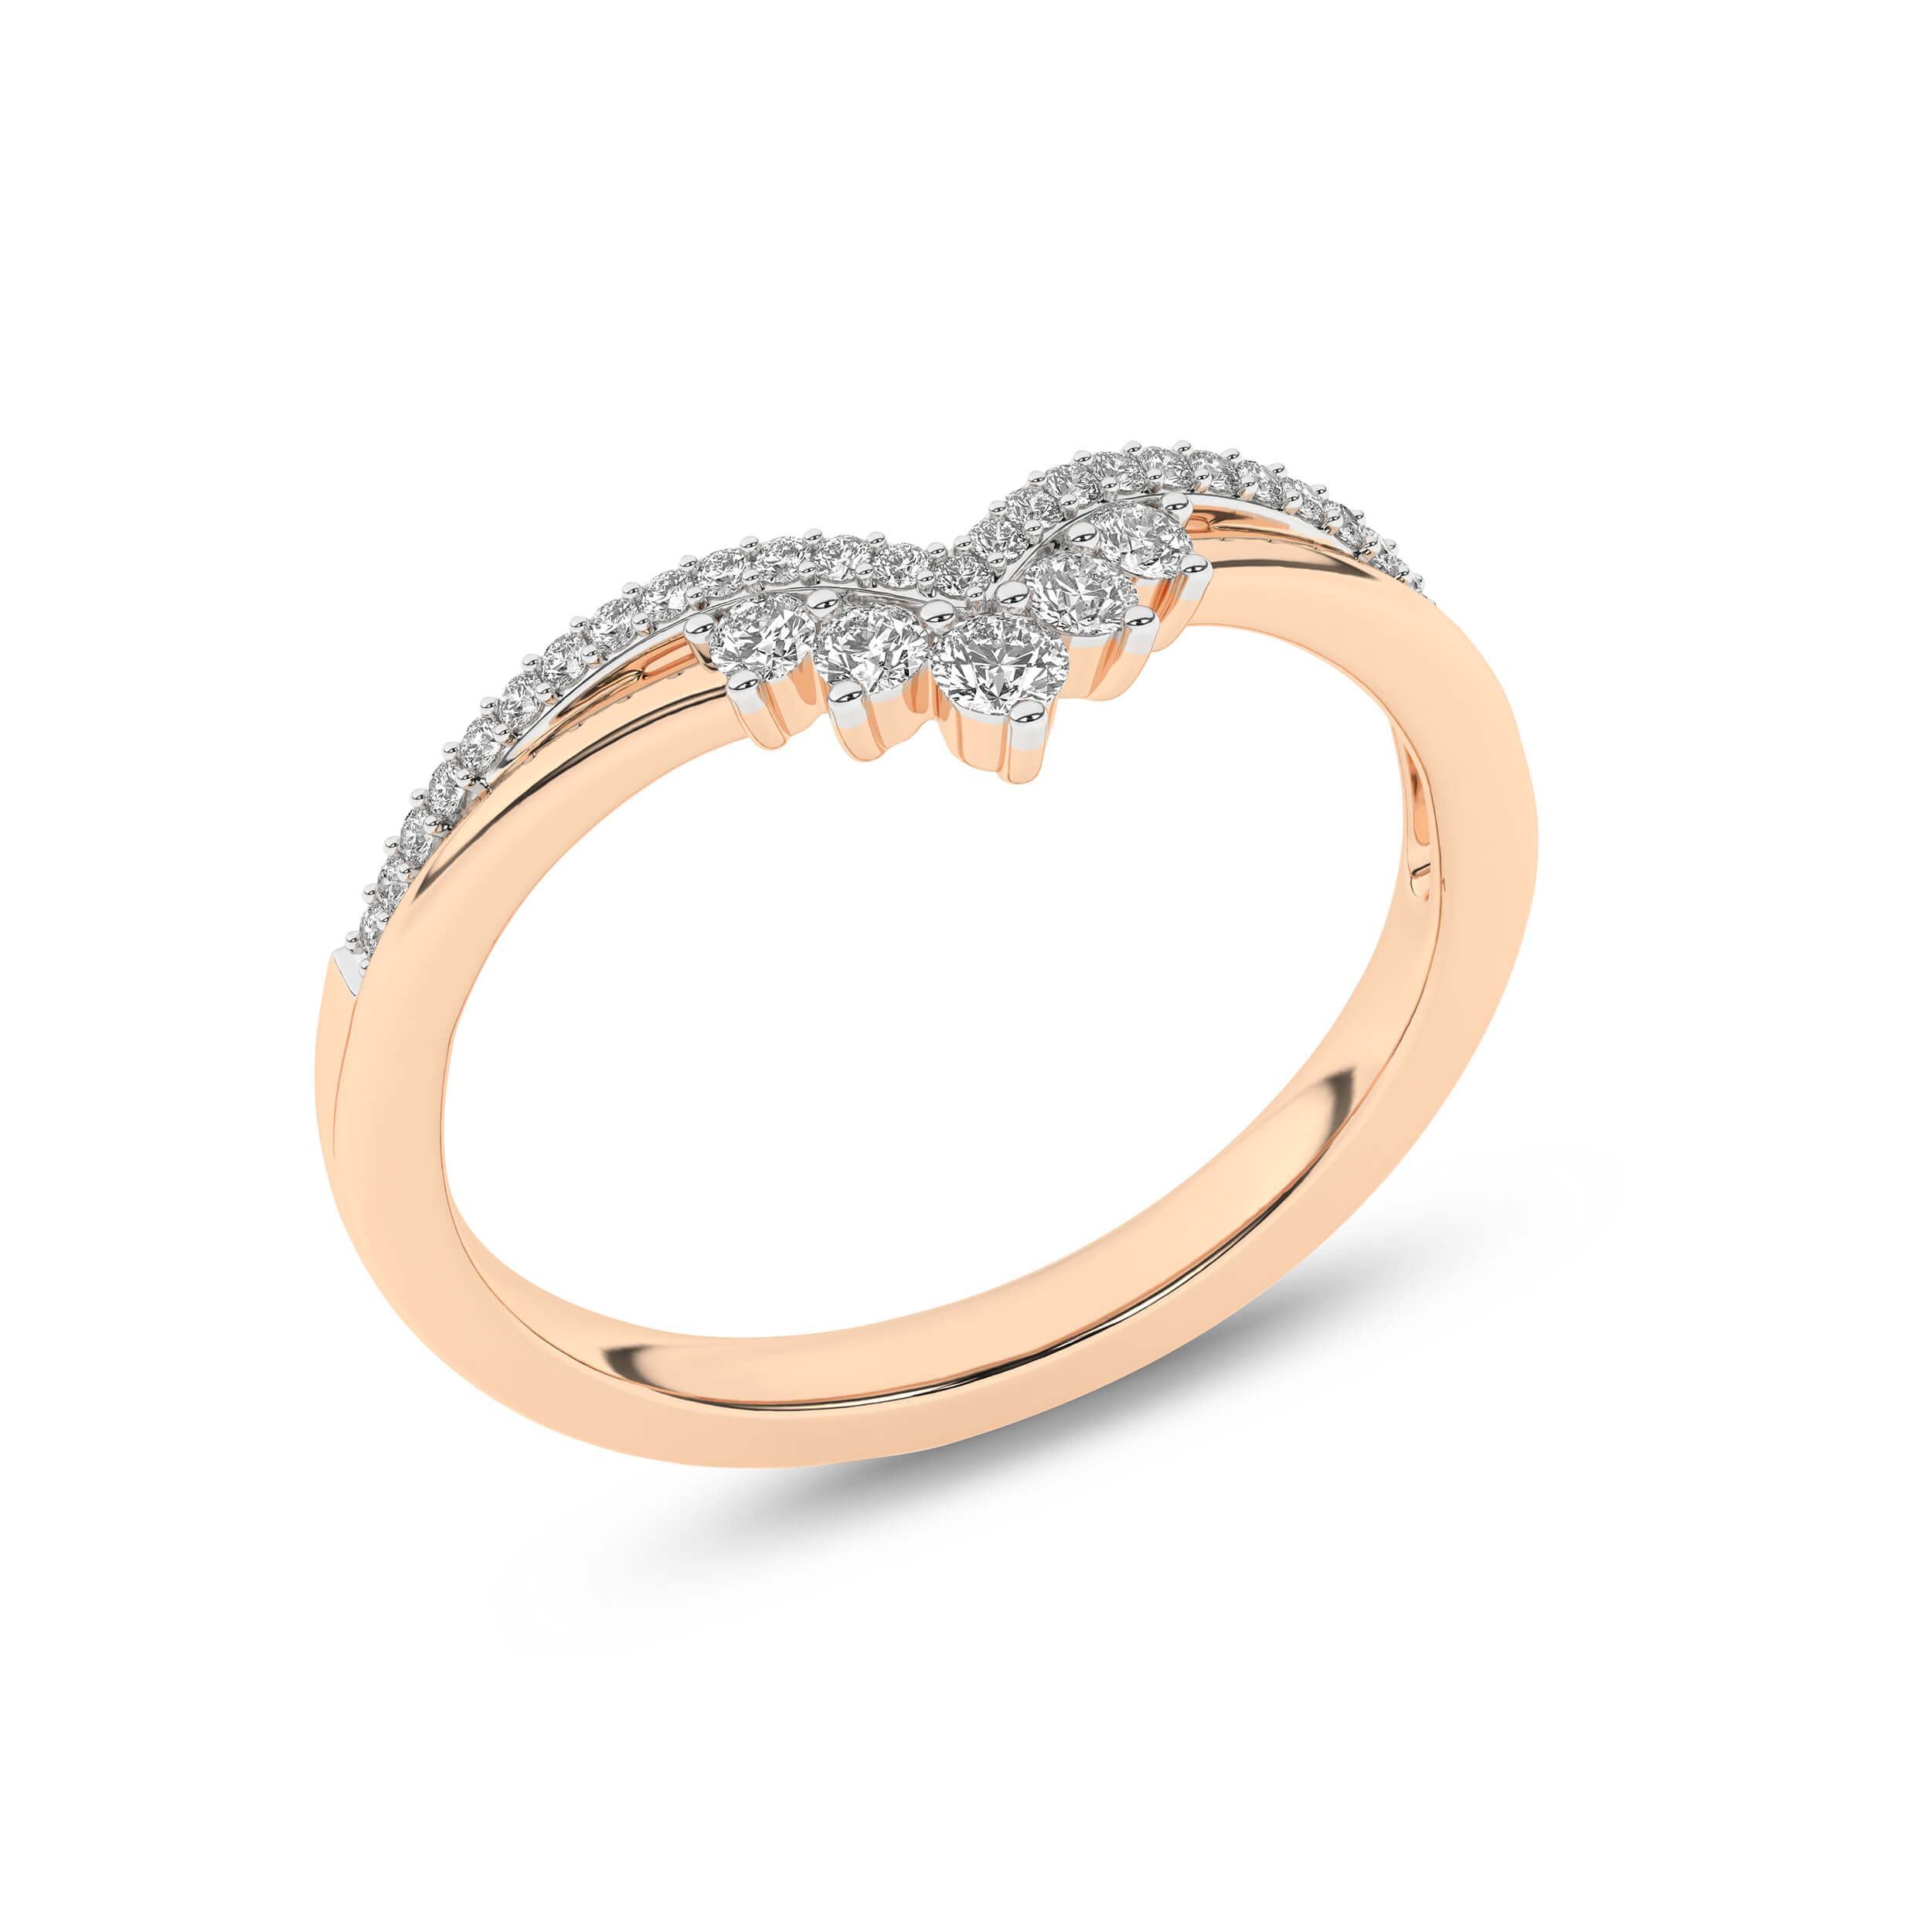 Inel din Aur Roz 14K cu Diamante, articol RF16788, previzualizare foto 4